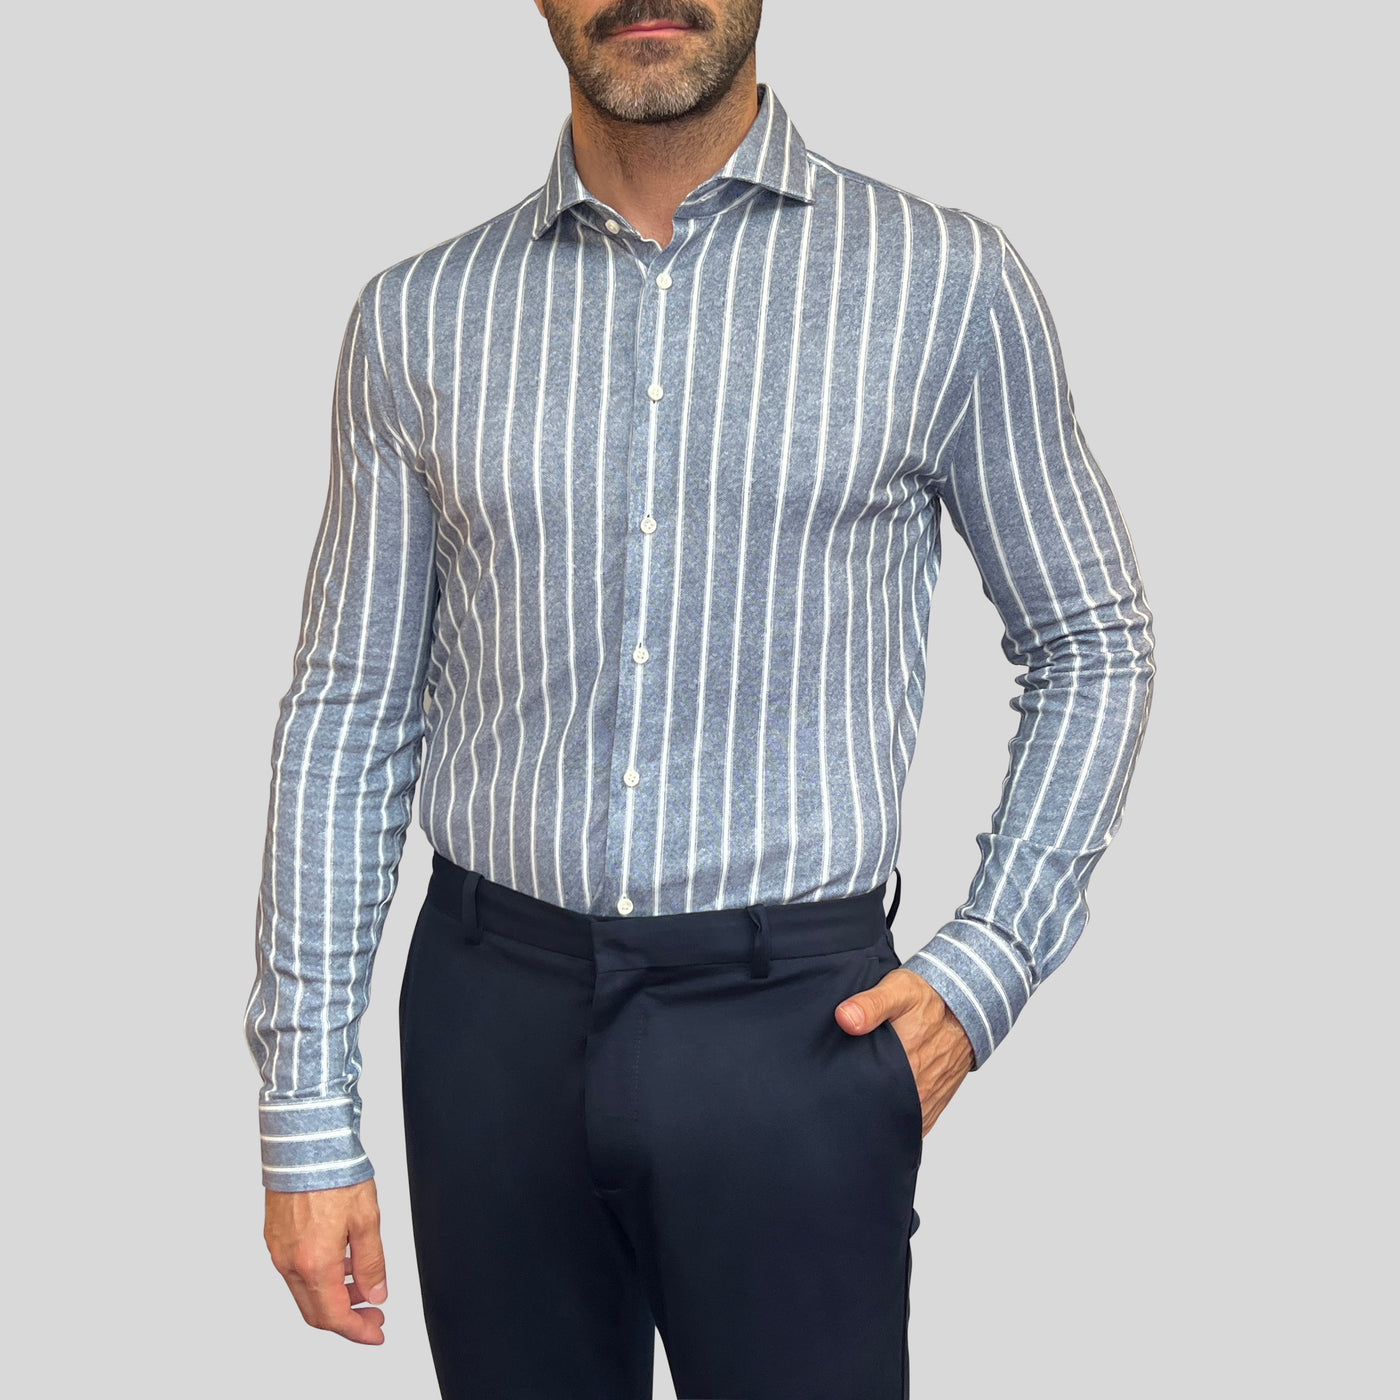 Gotstyle Fashion - Desoto Collar Shirts Bold Stripe Spread Collar Shirt - Blue/White